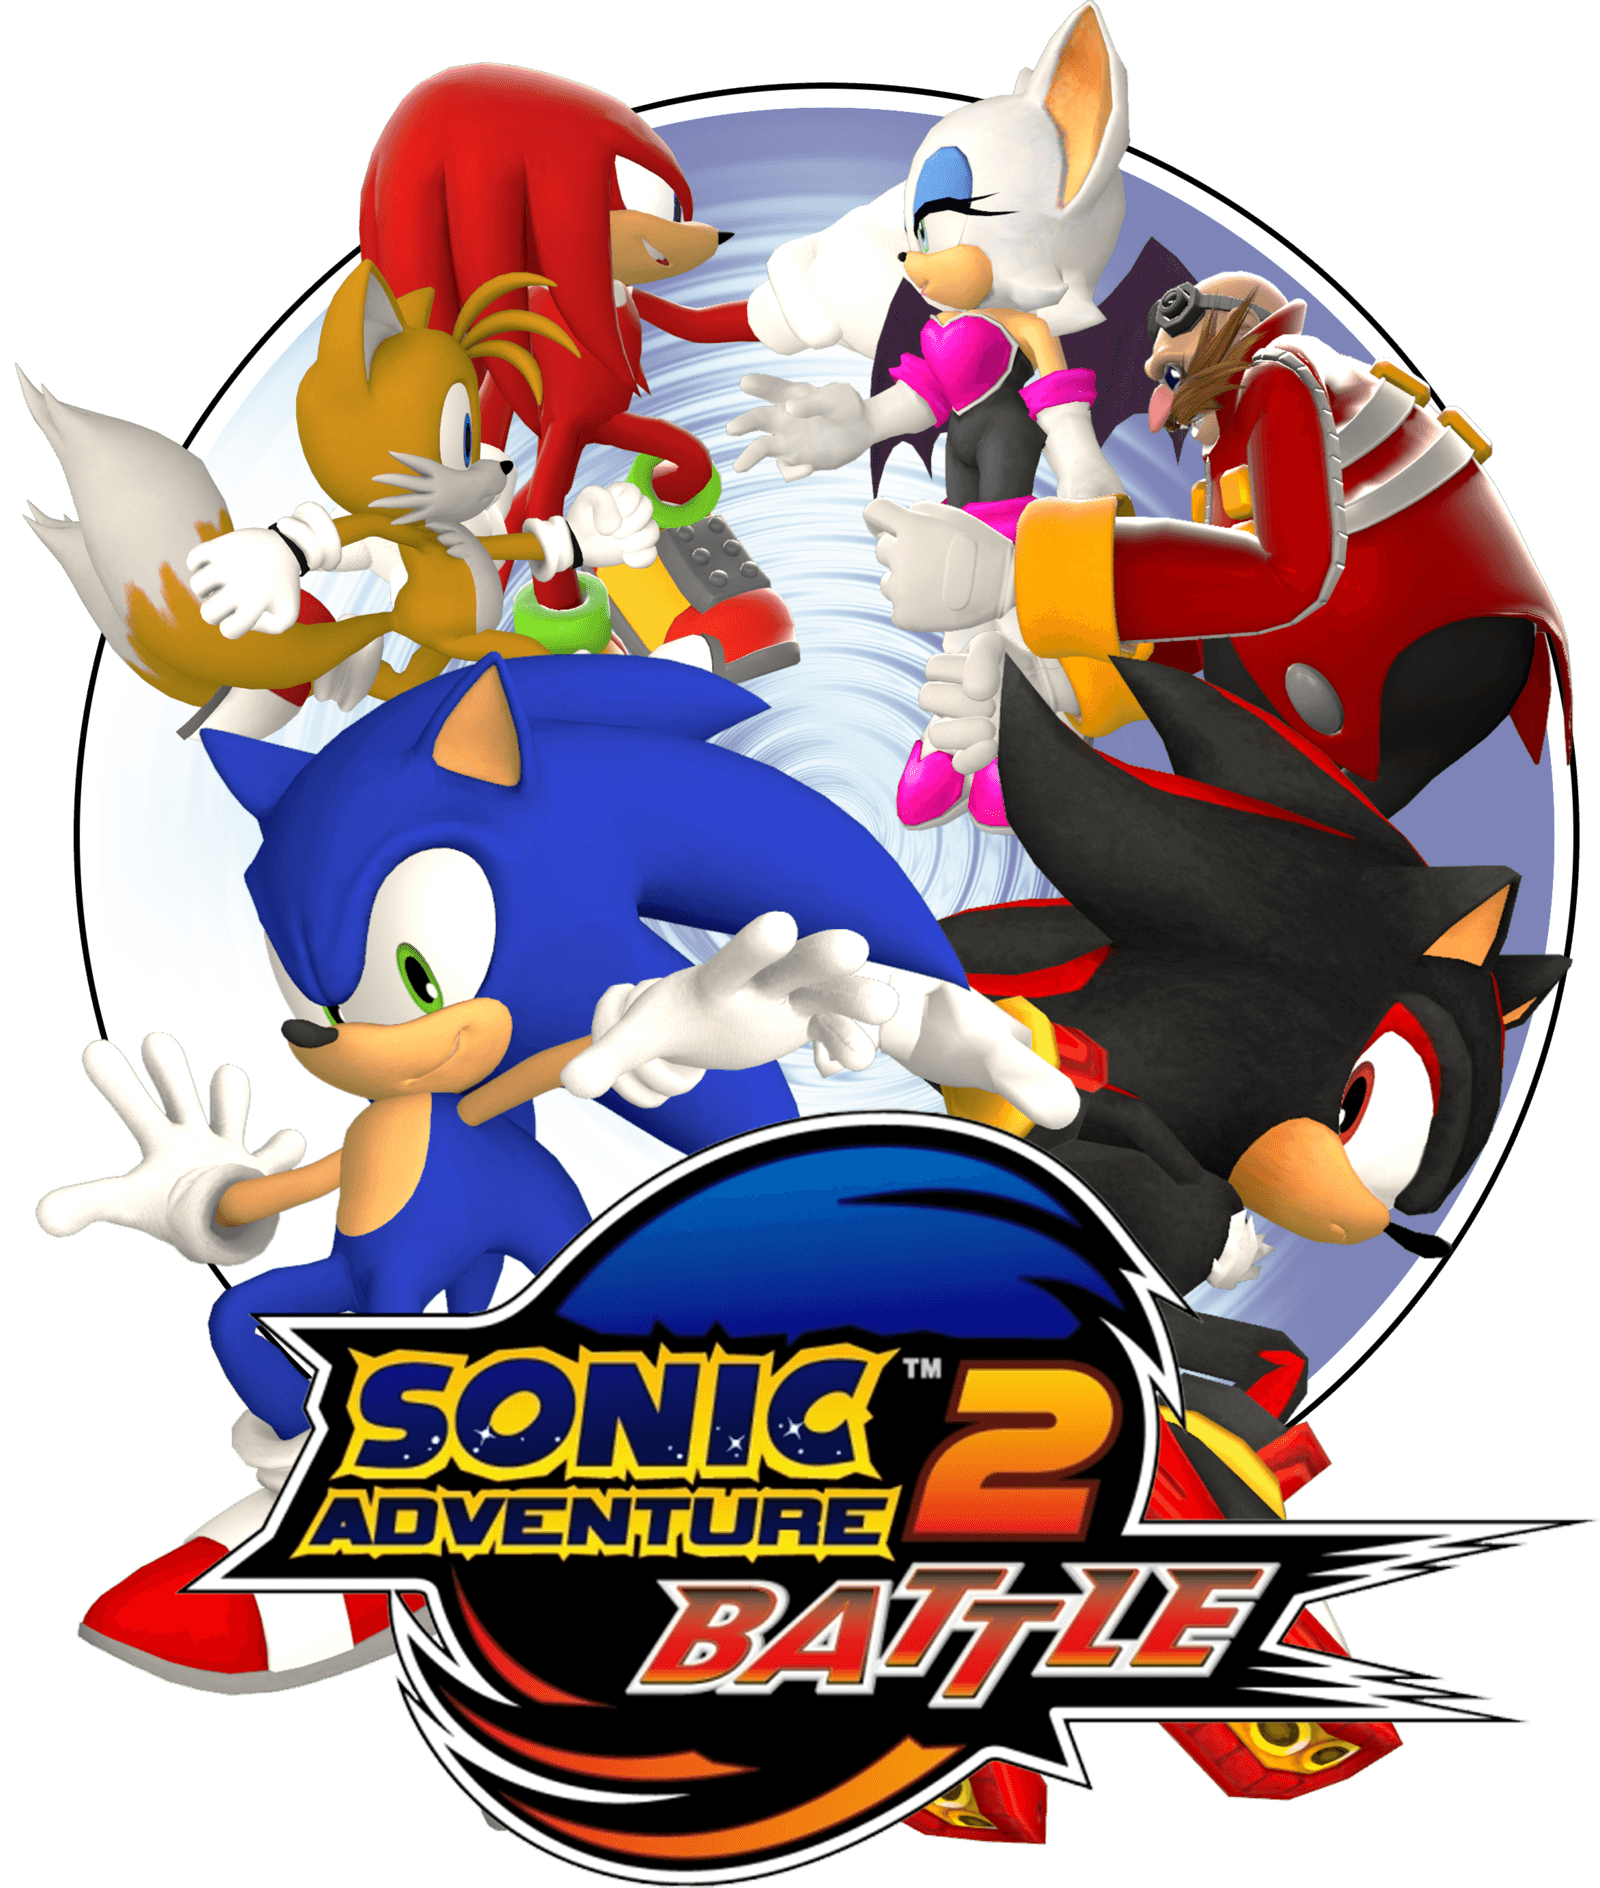 Sonic_adventure_2__battle_logo_by_lucas_da_hedgehog D5t1mnk.png